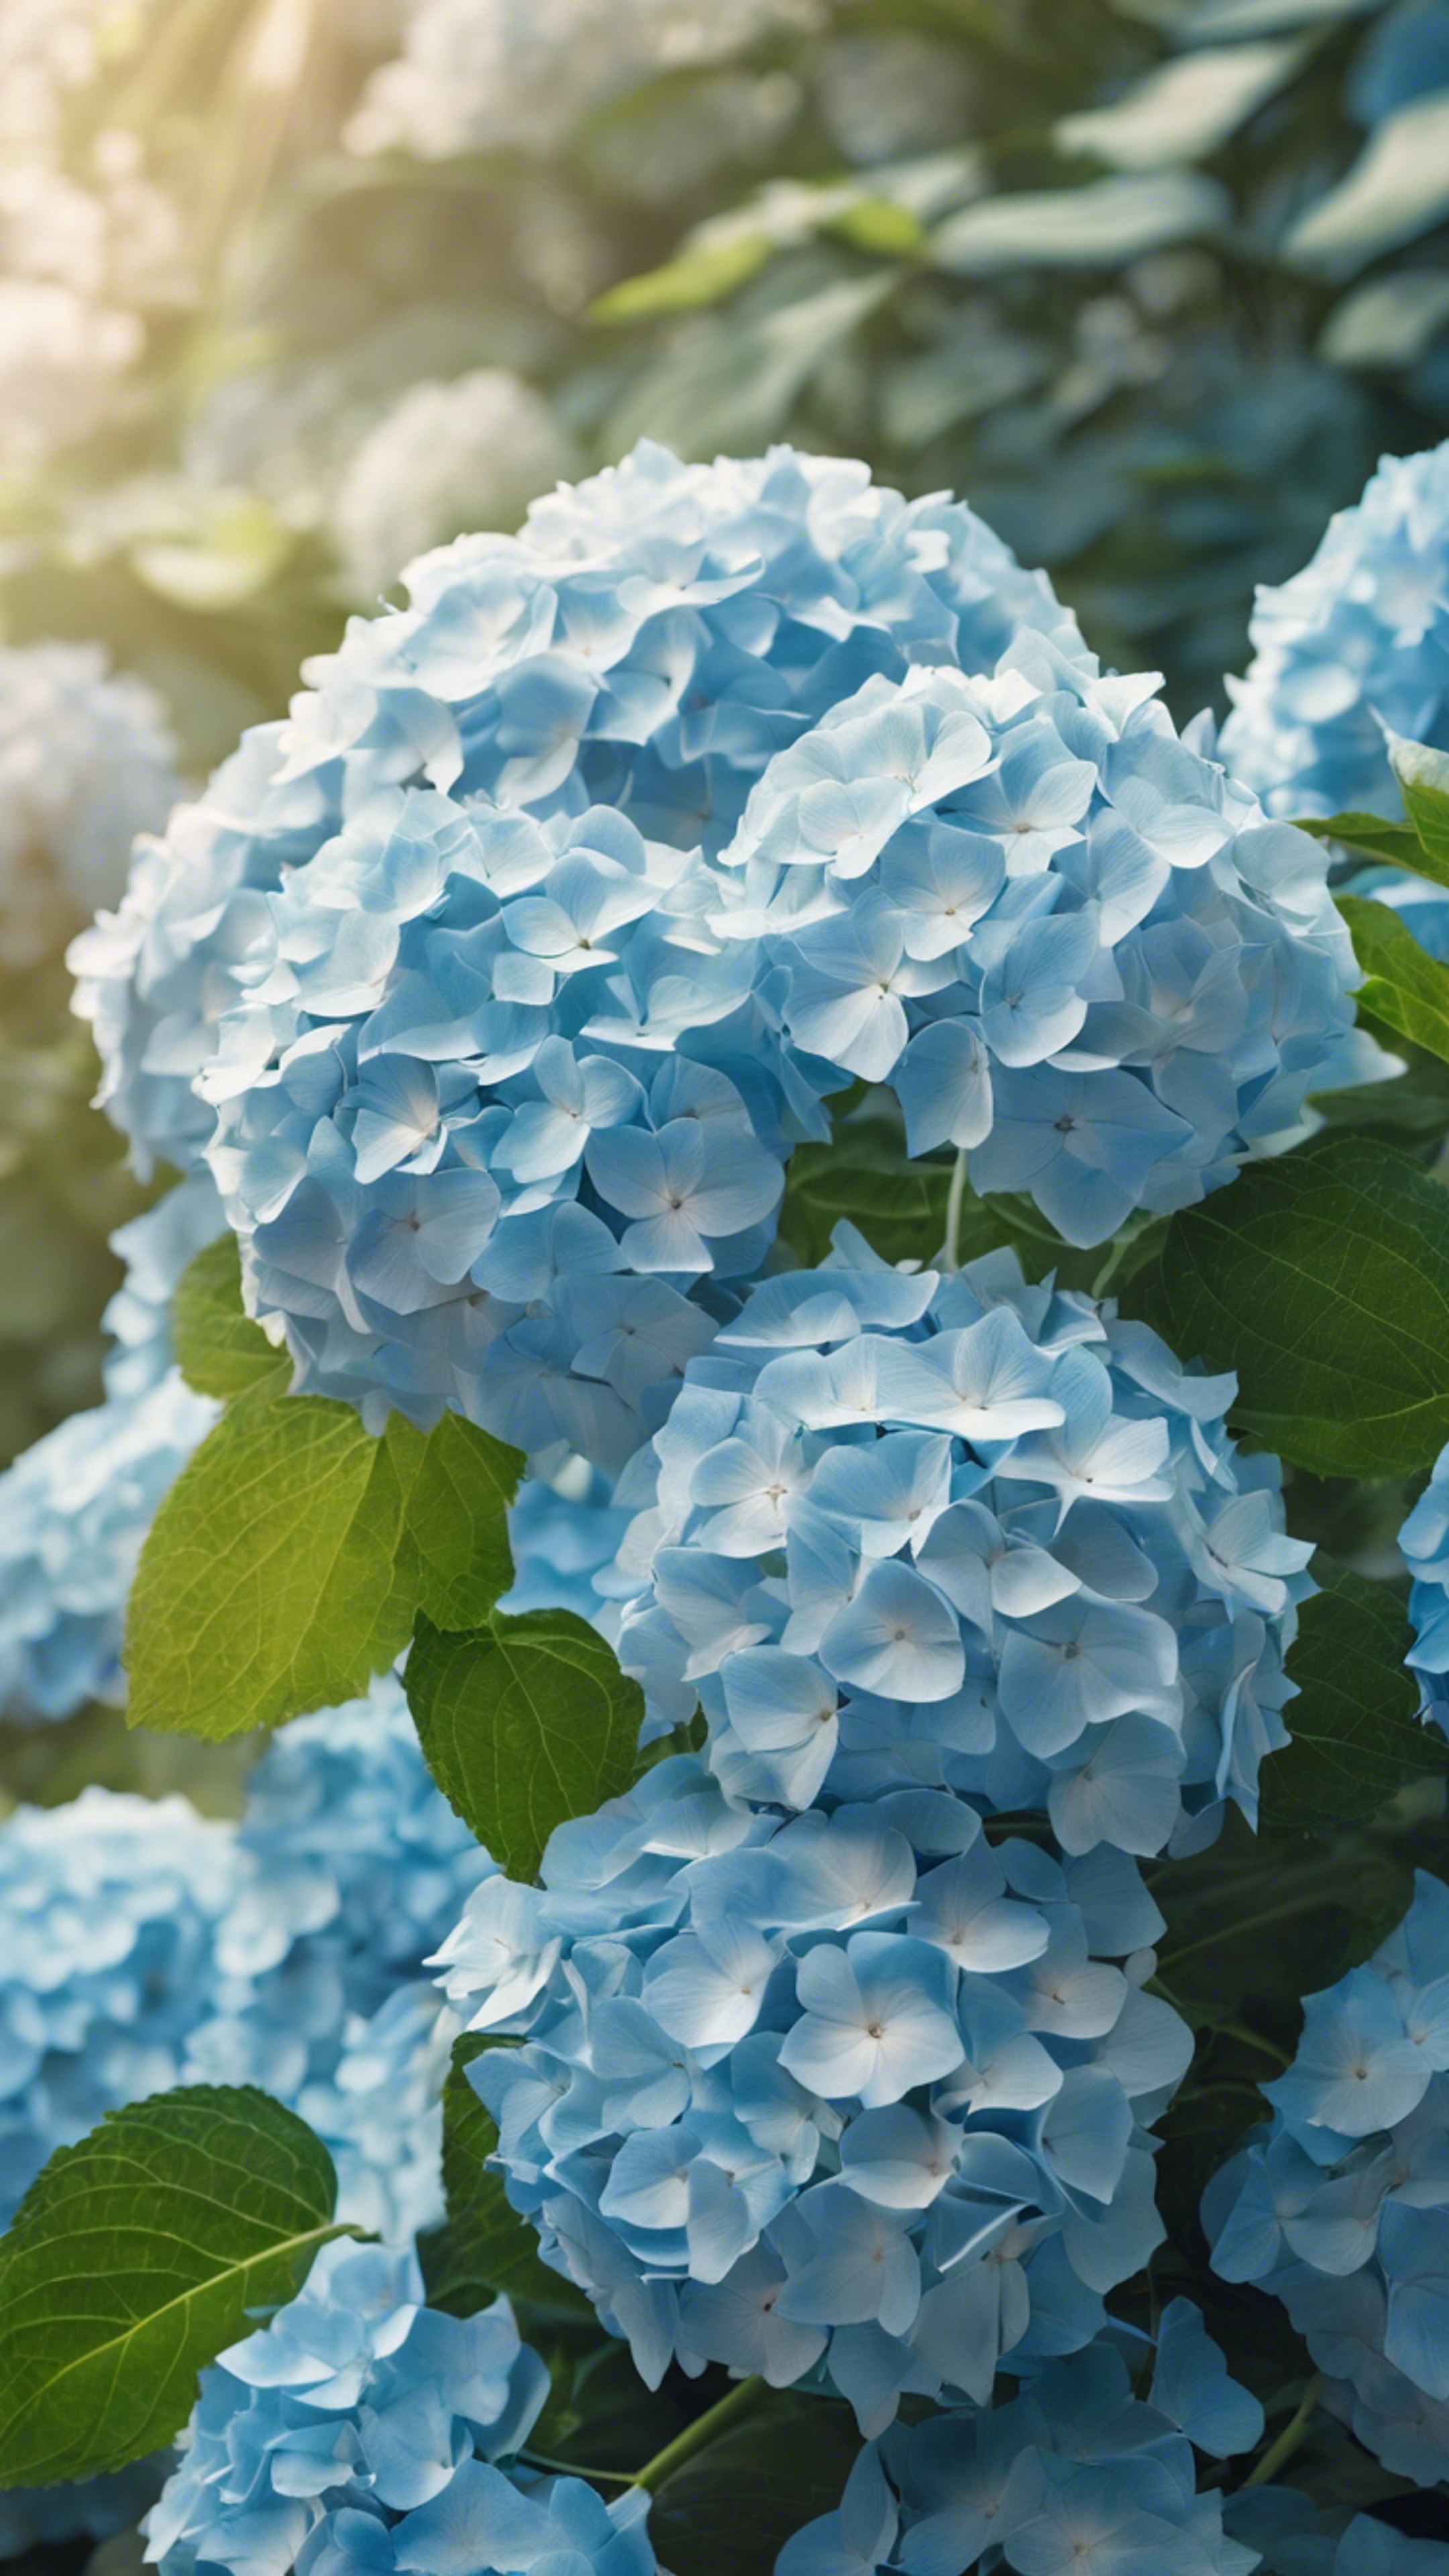 A cluster of pastel blue hydrangeas swaying gently in a sunny garden.壁紙[9c6026d81c604b58b63f]